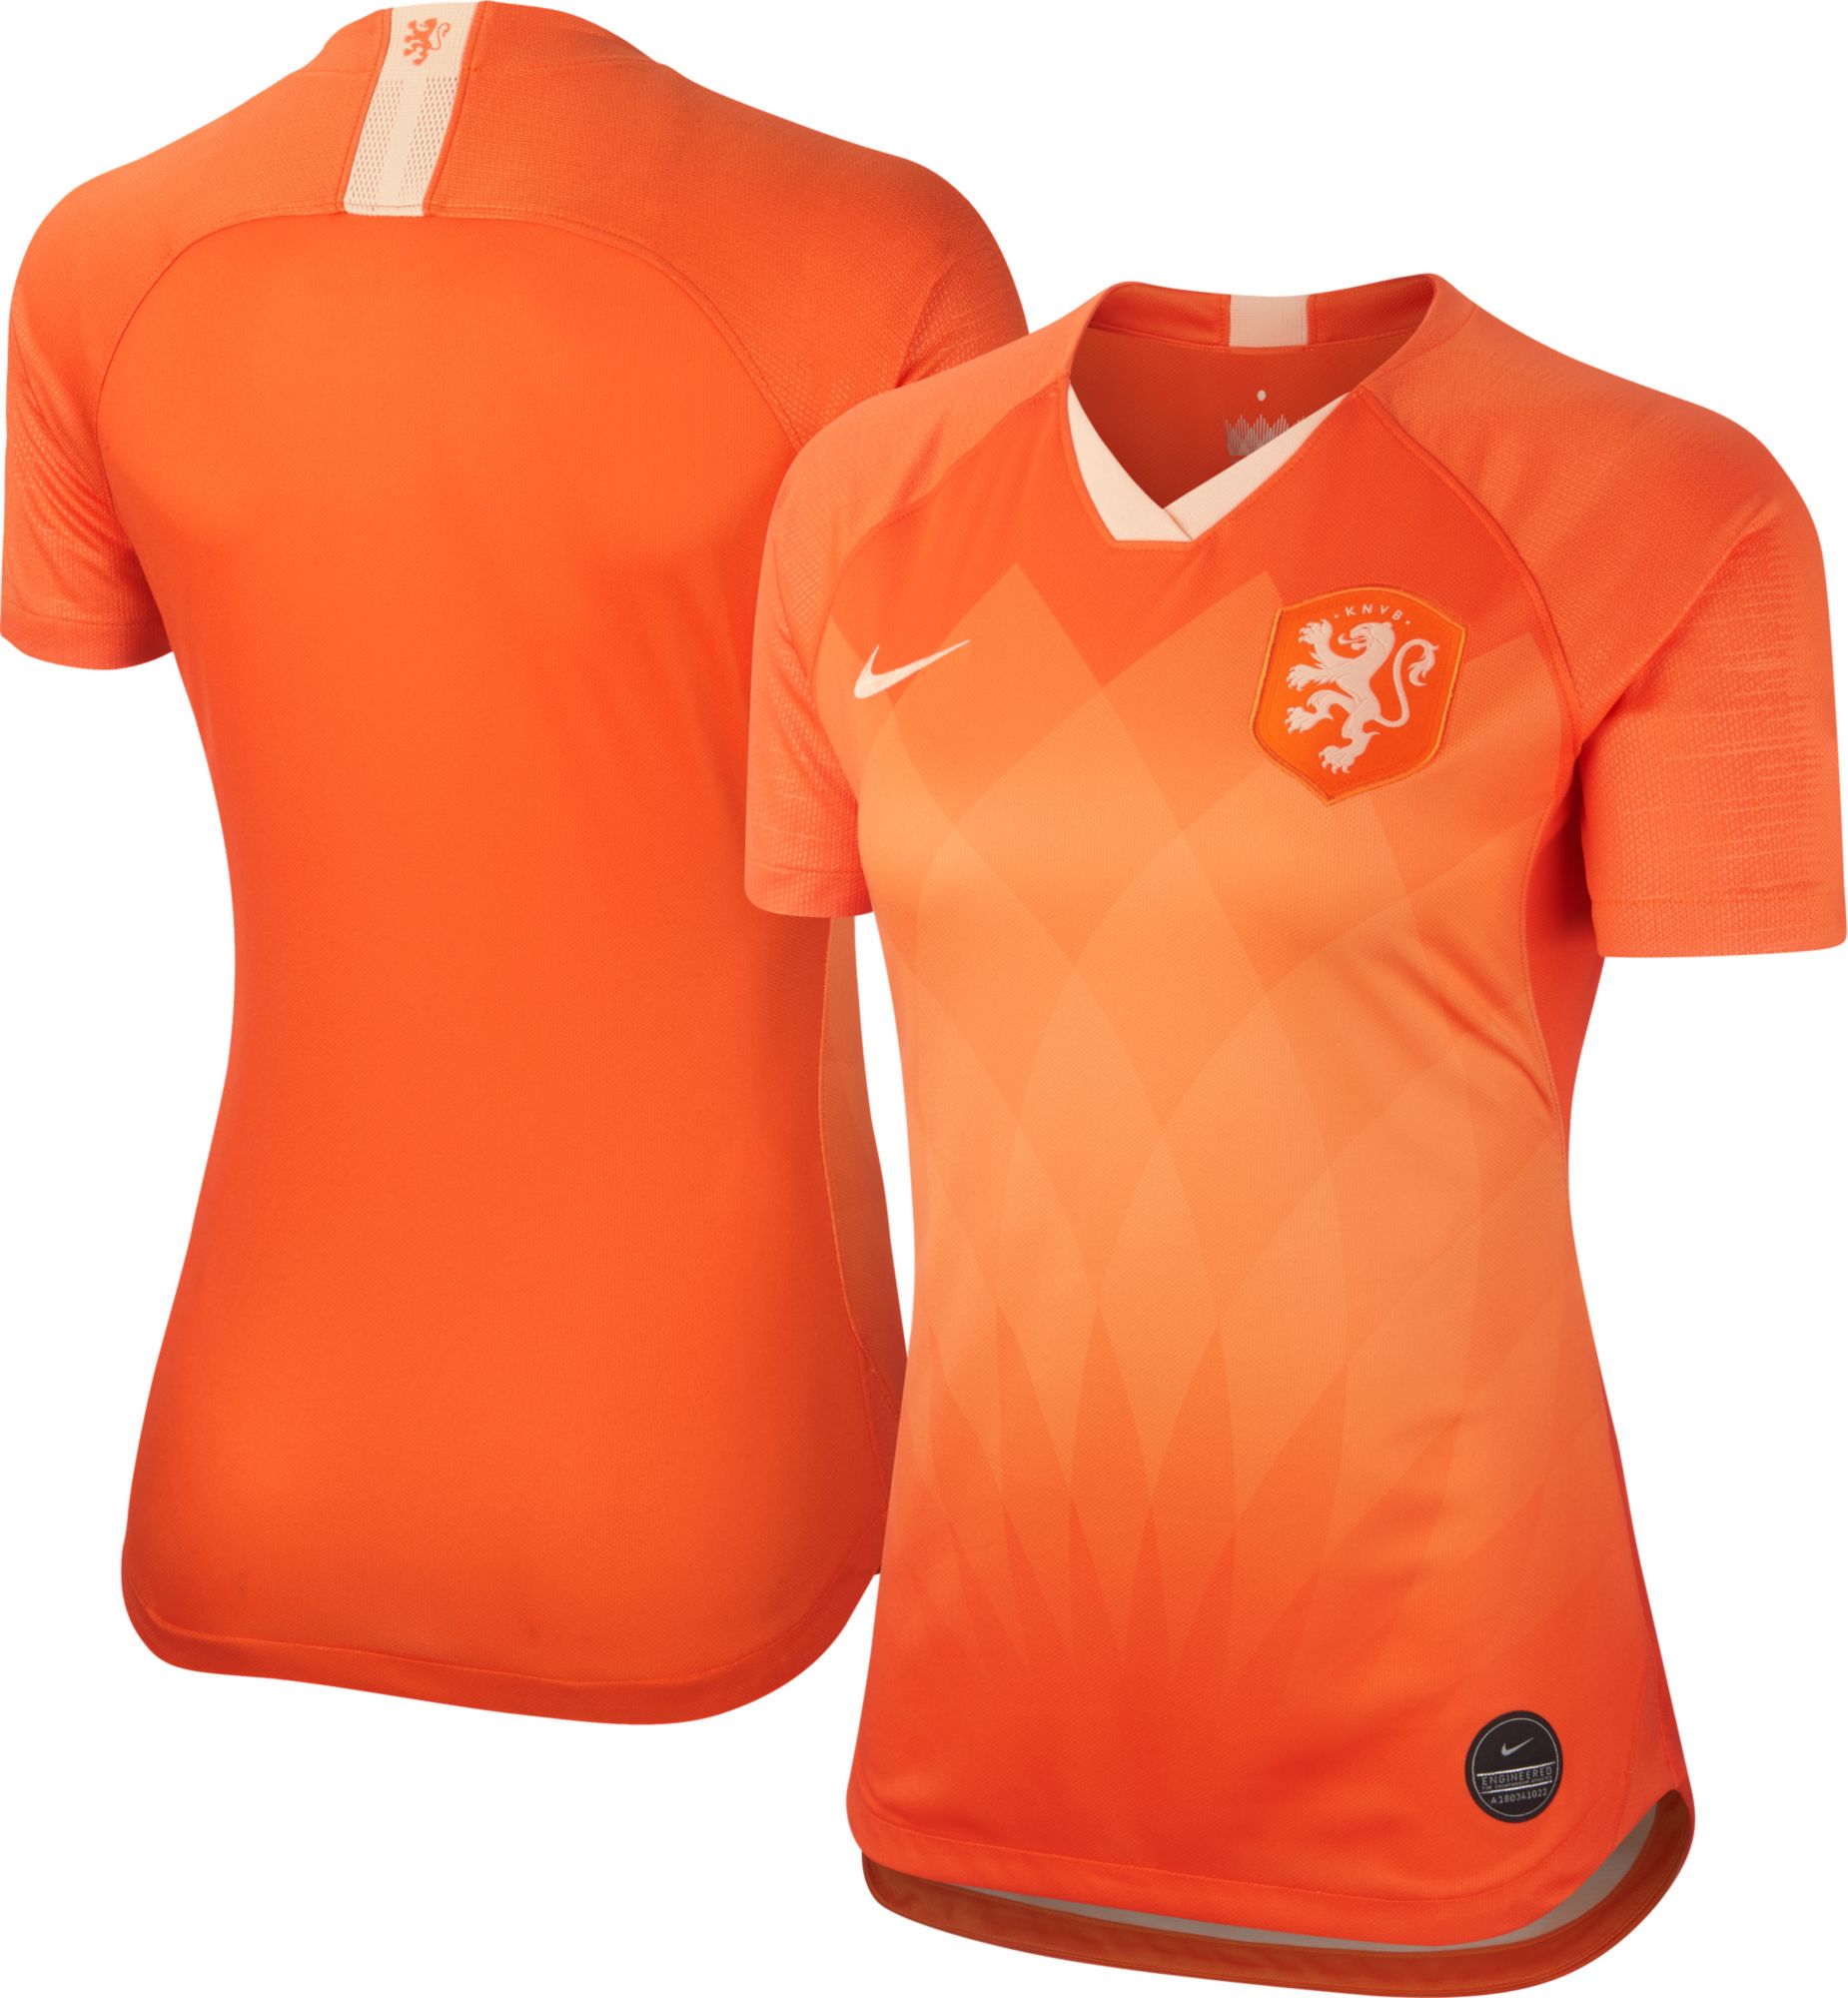 holland soccer jersey 2019